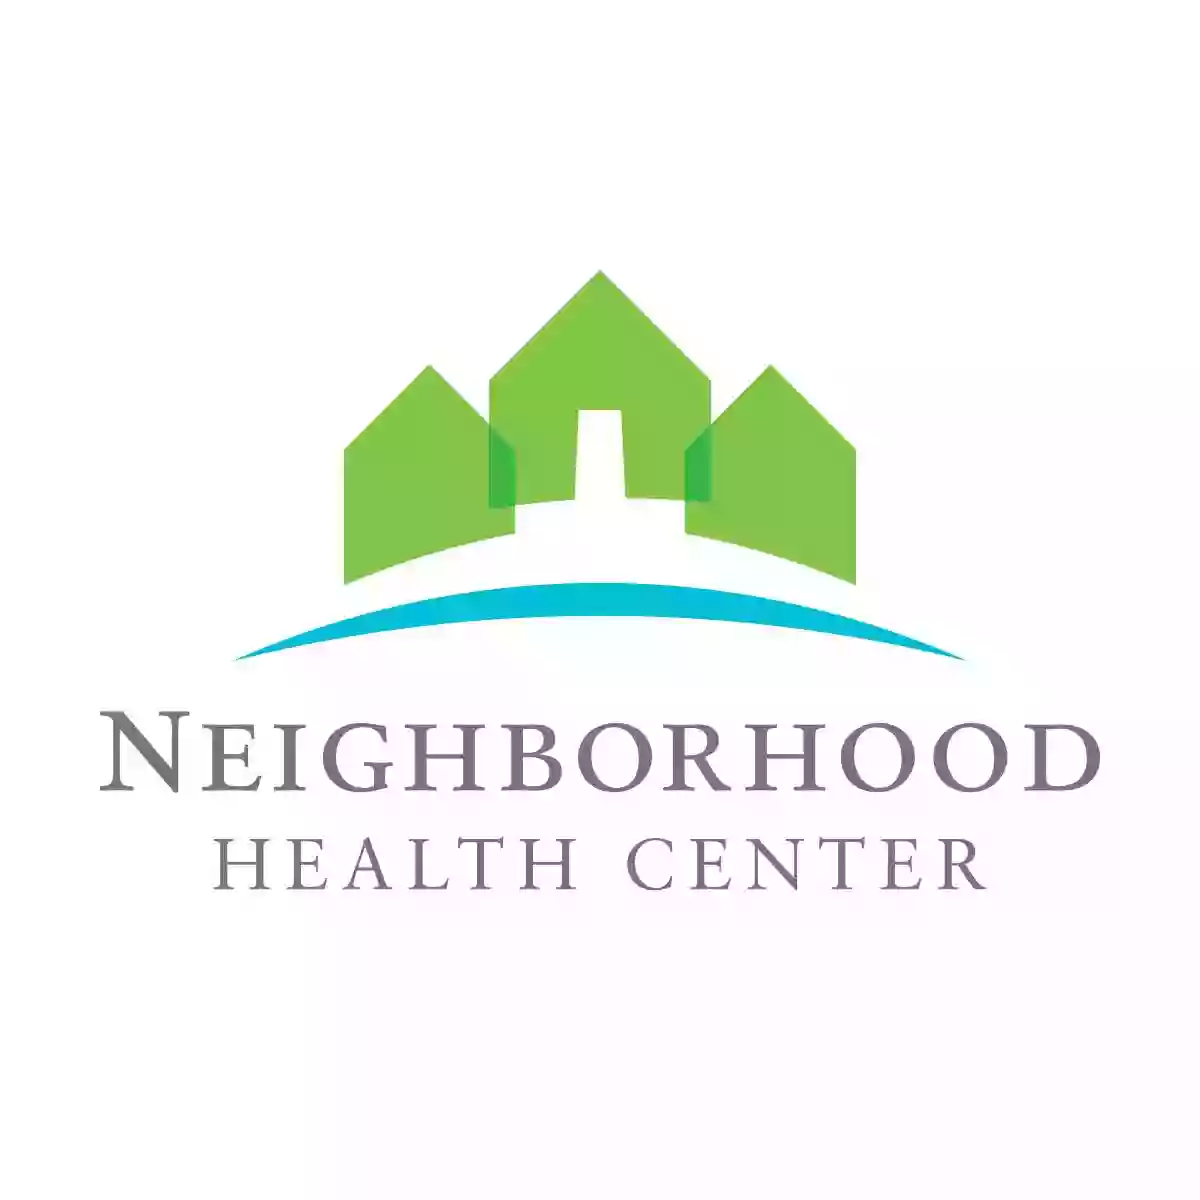 Neighborhood Health Center Southtowns dba of NORTHWEST BUFFALO COMMUNITY HEALTH CARE CENTER, INC.